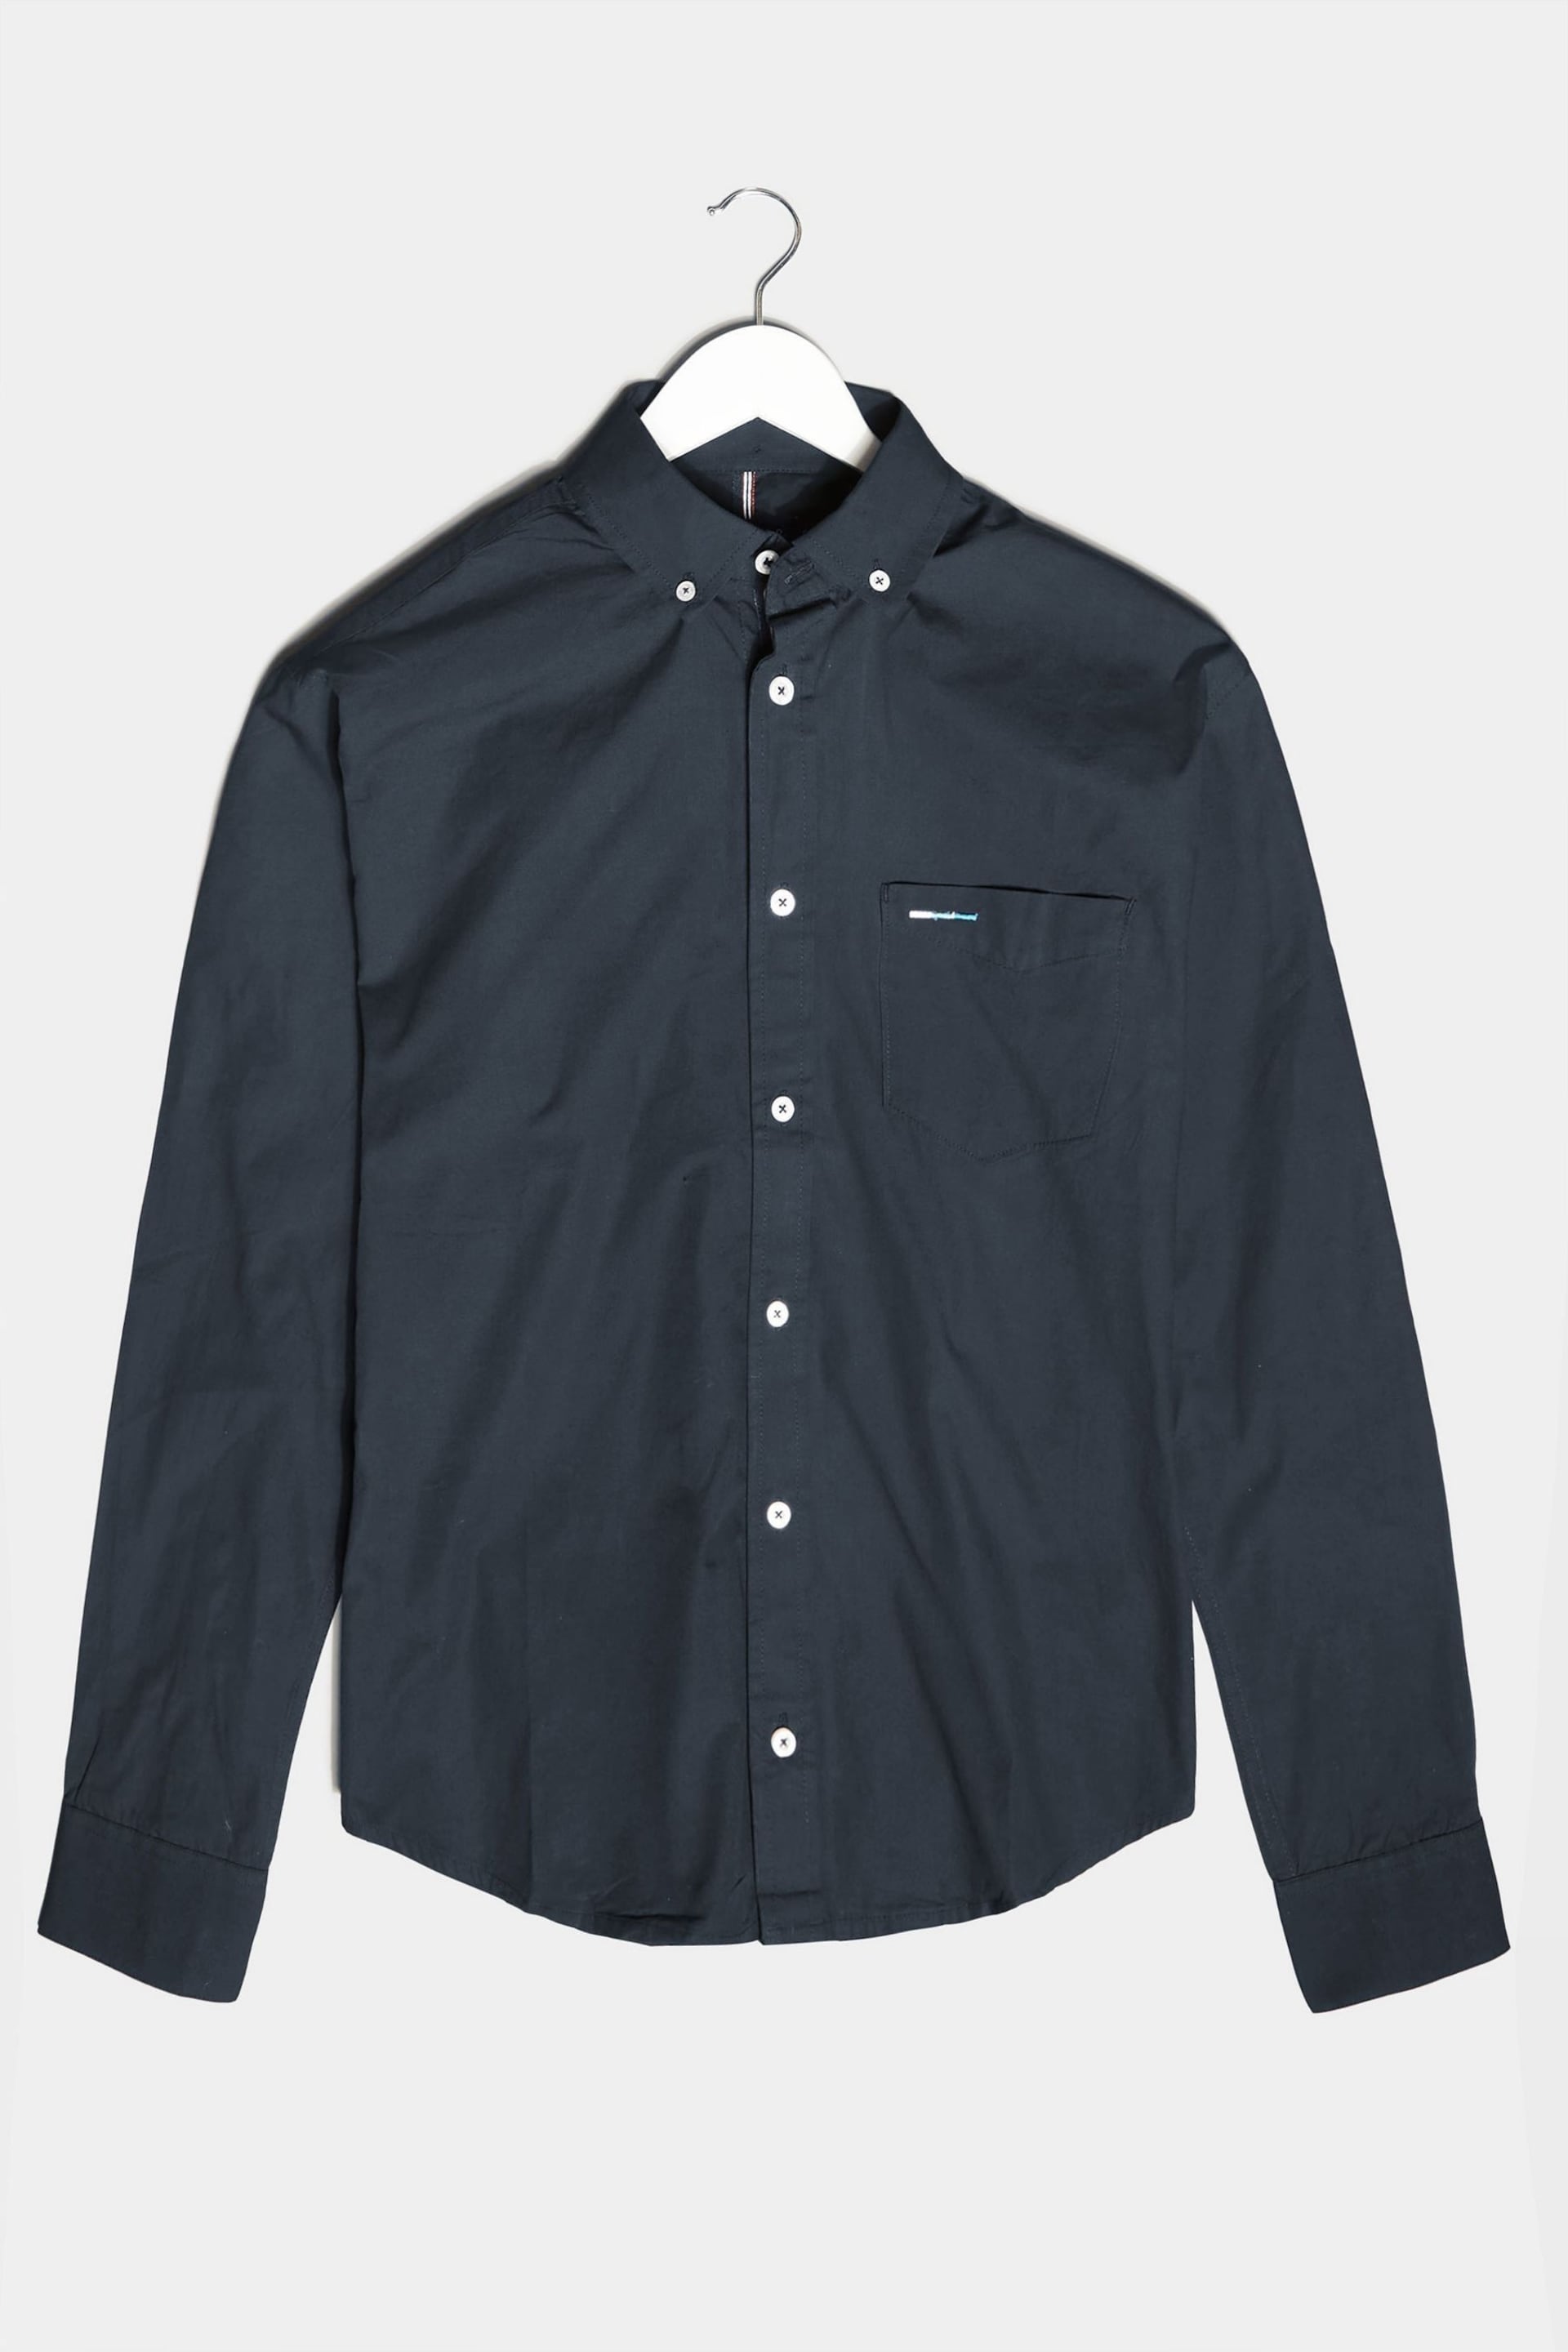 BadRhino Big & Tall Navy Essential Long Sleeve Oxford Shirt - Image 2 of 3